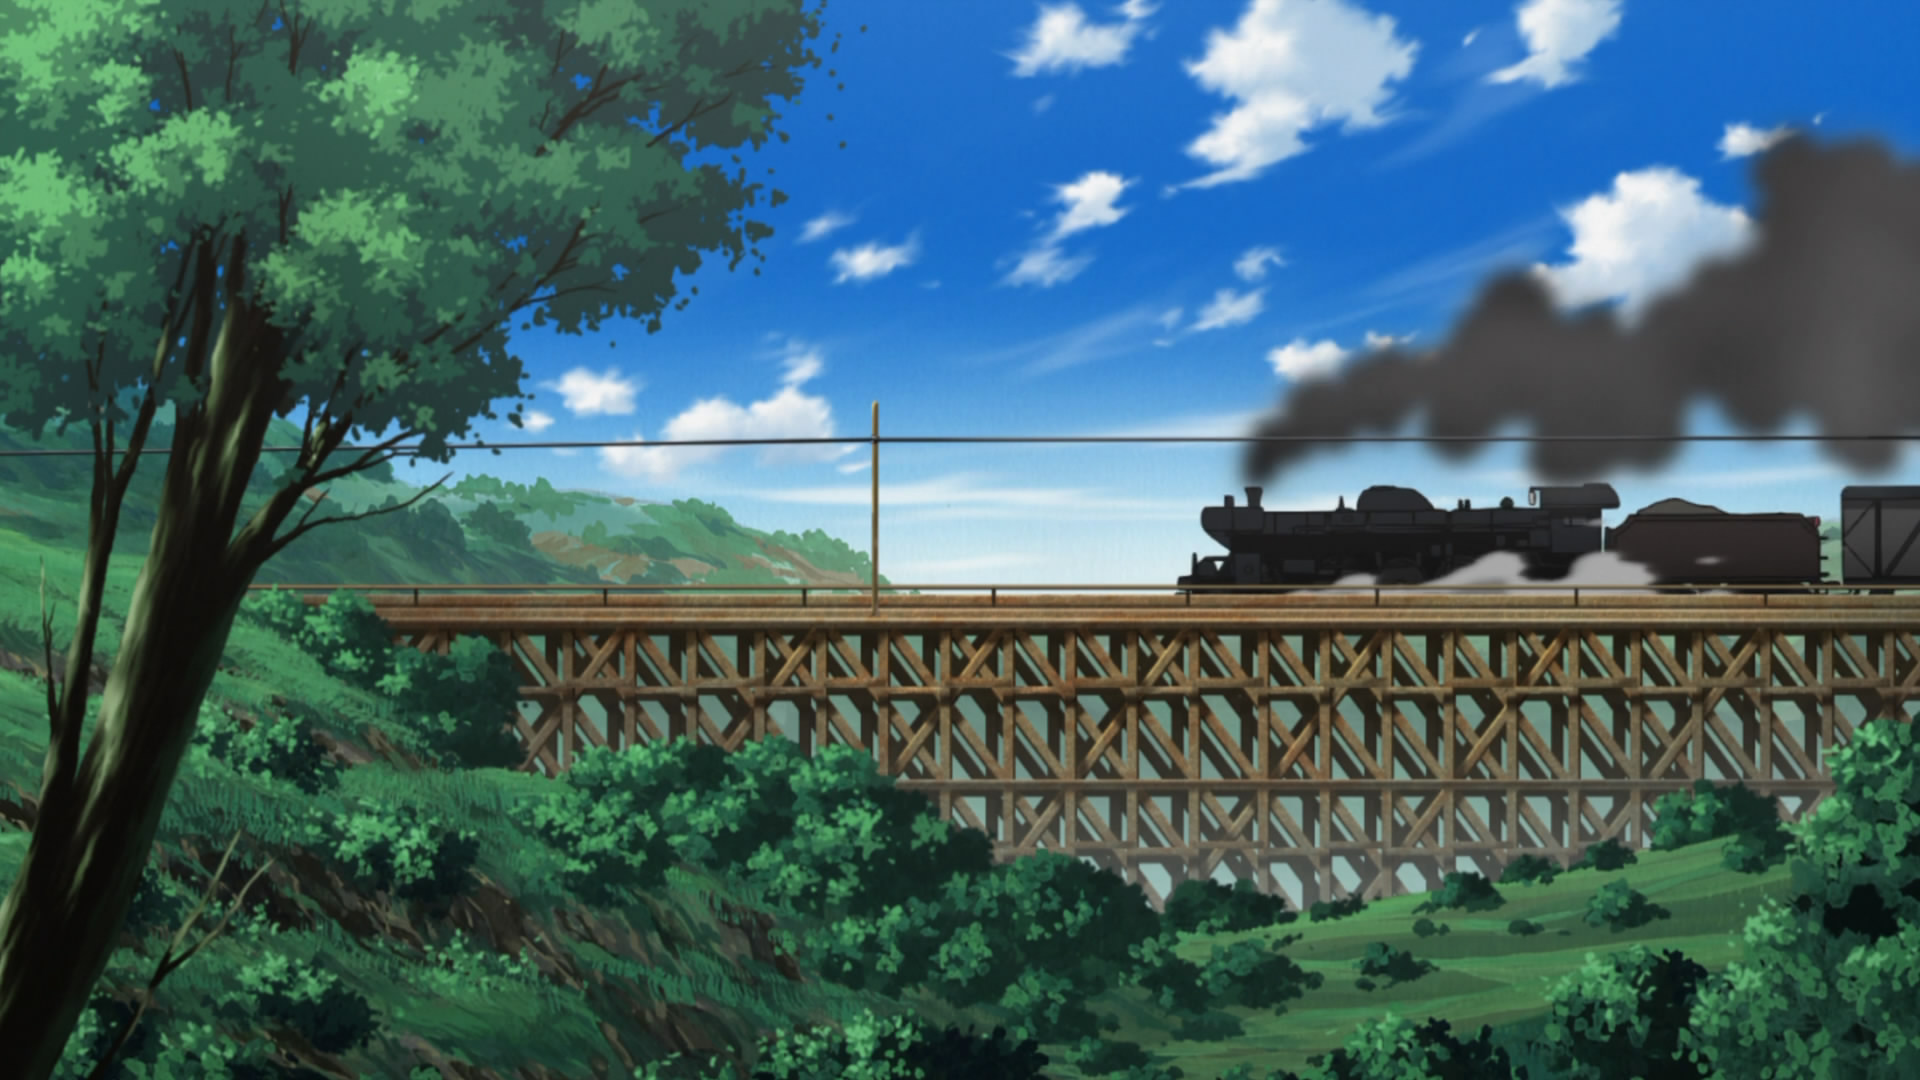 Anime Sora no Woto HD Wallpaper | Background Image